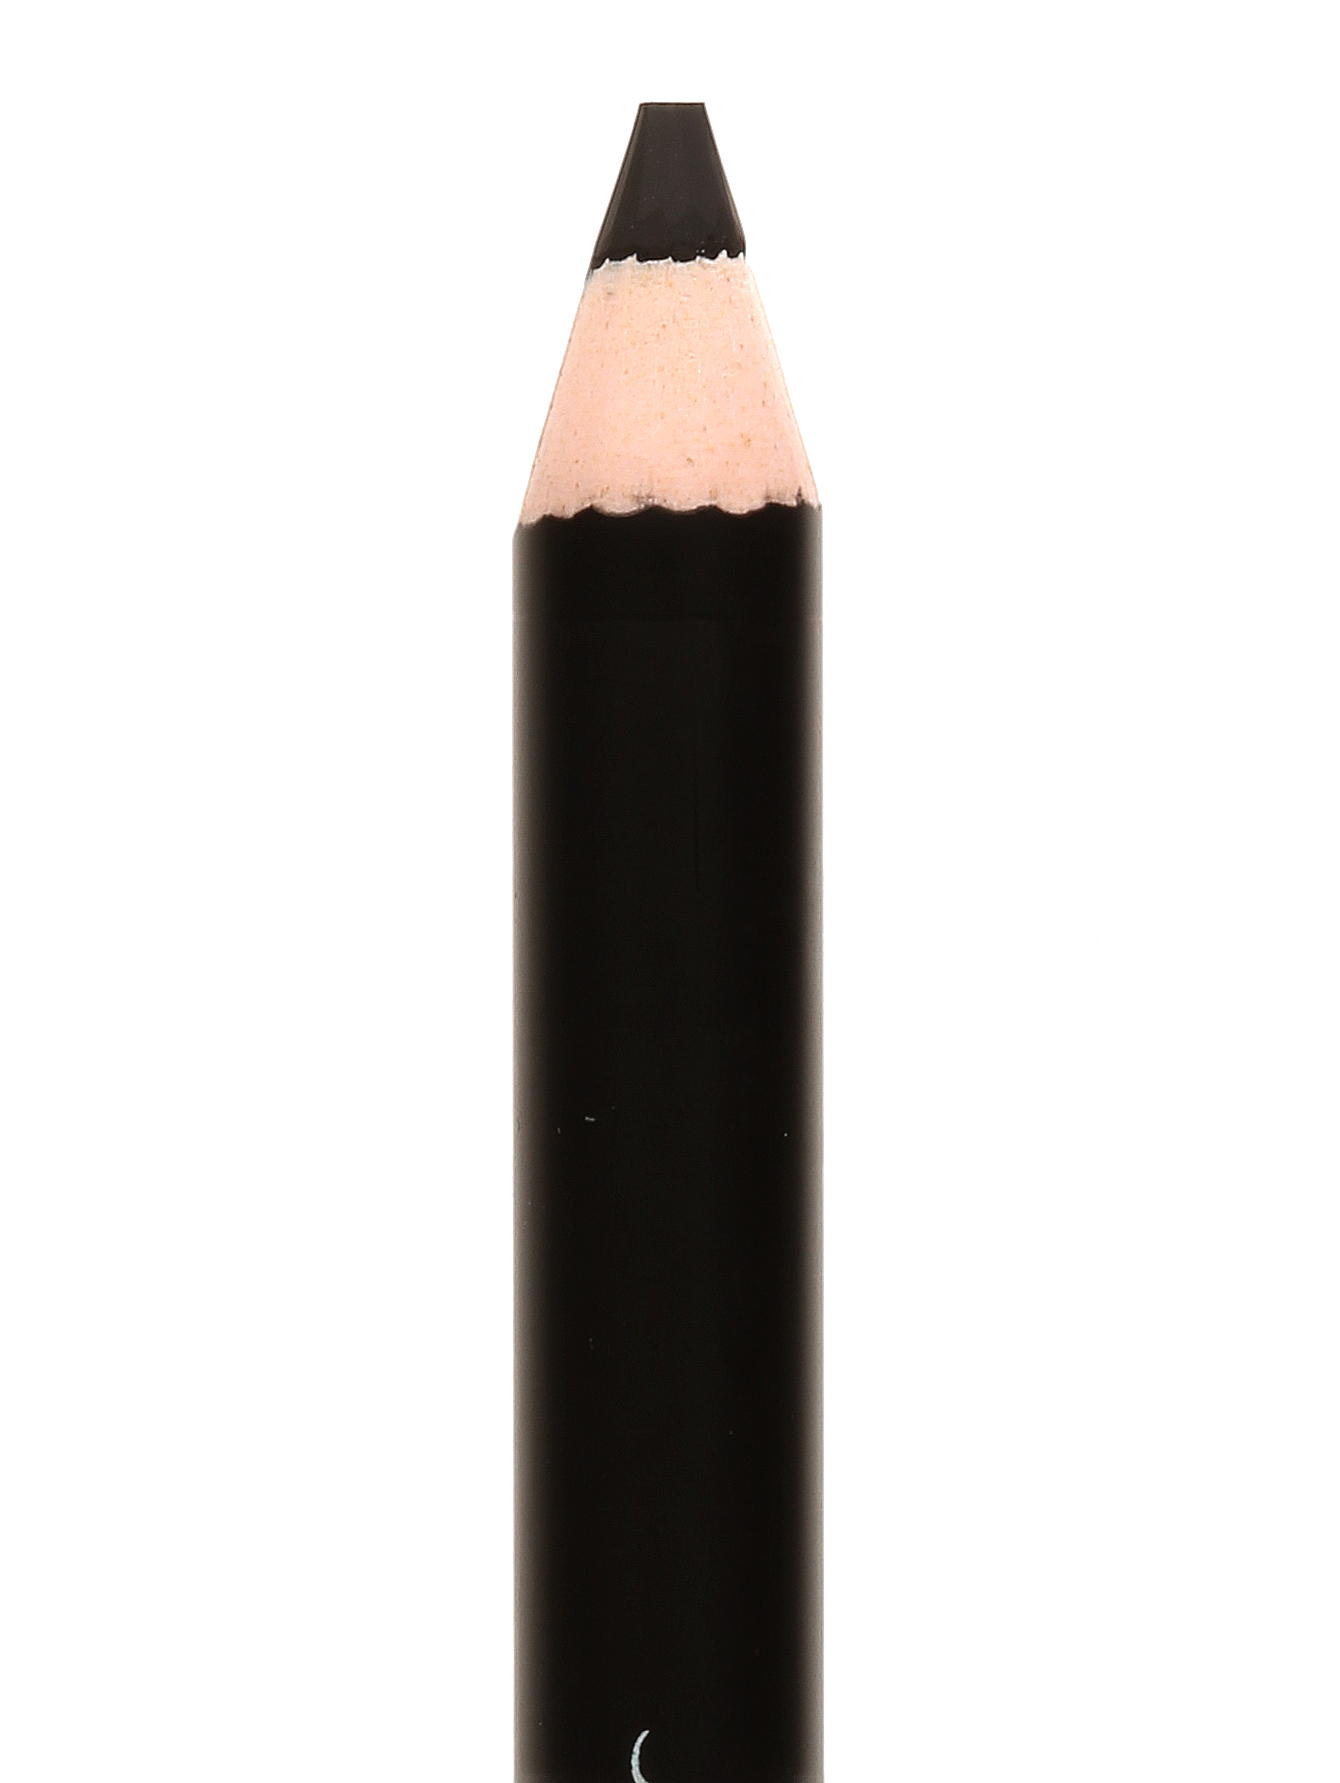 Карандаш для век - BK901, Eyebrow Pencil - Общий вид